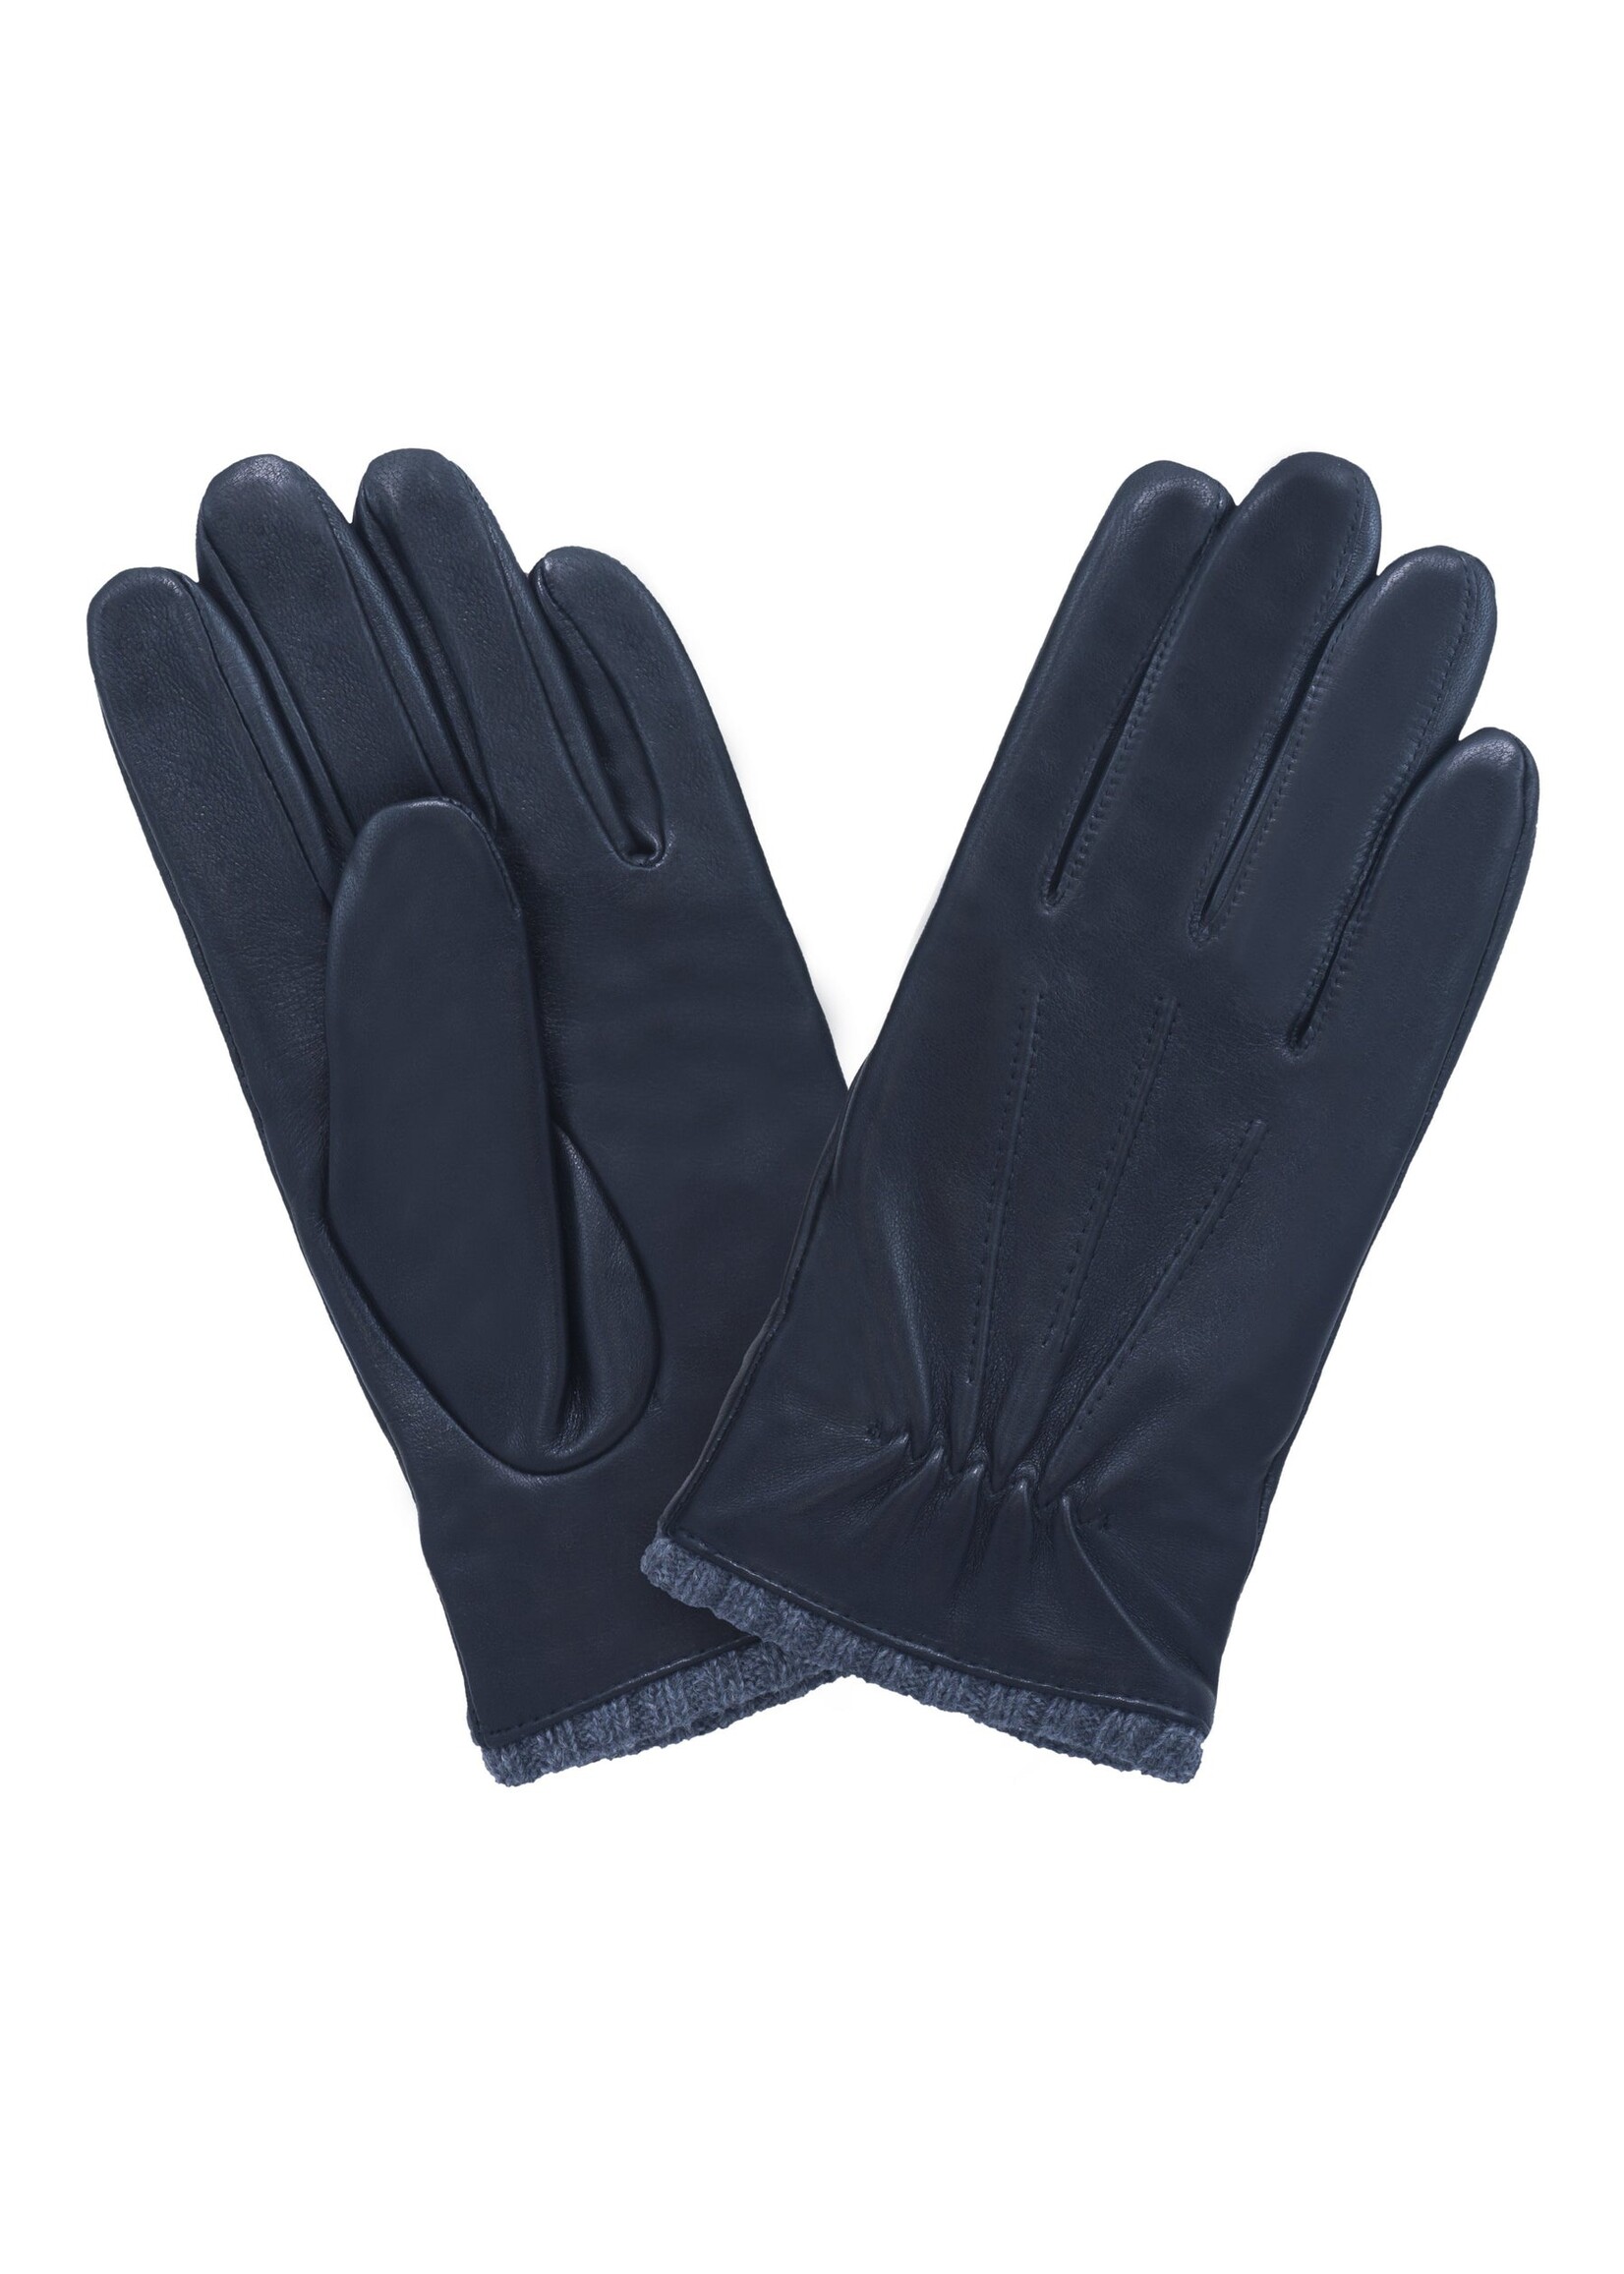 GLOVE STORY Men's deerskin leather gloves